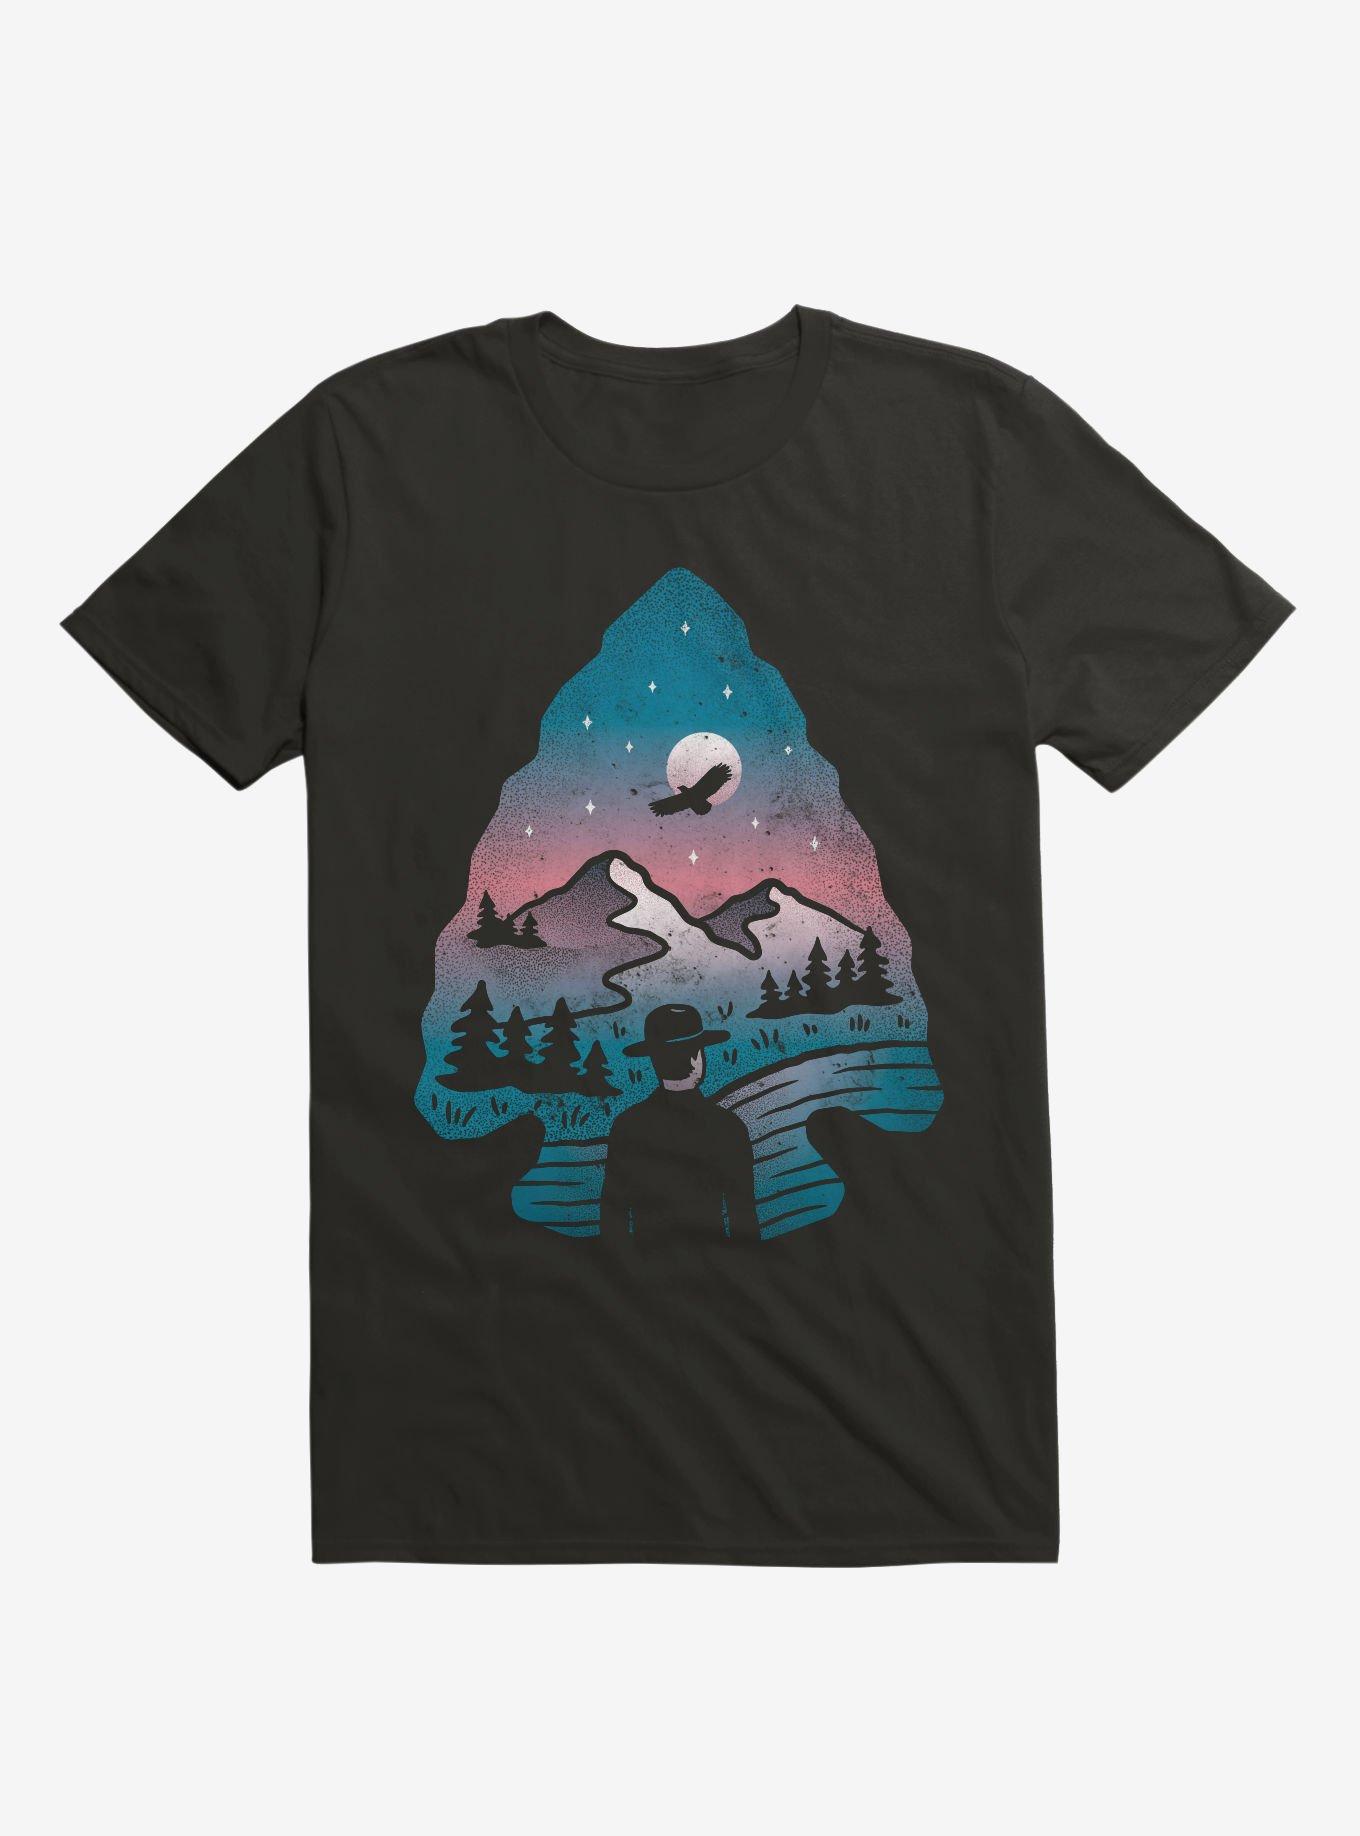 Take Aim Forest Landscape T-Shirt